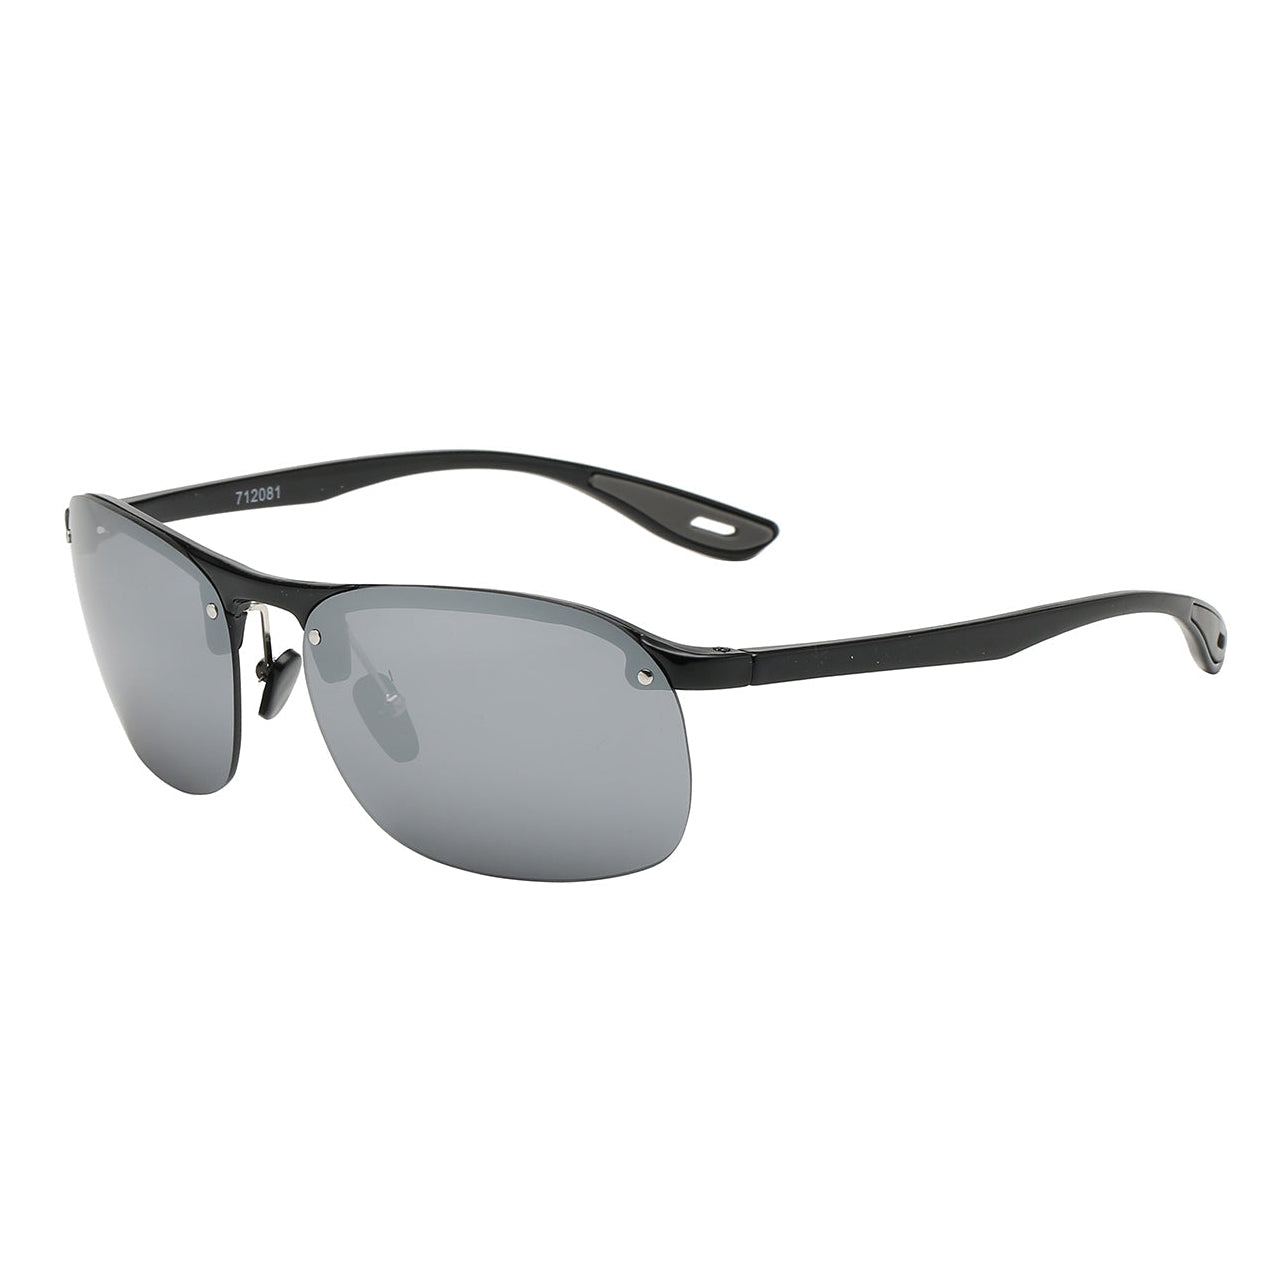 American Classic 712081 Popular Semi-Rimless Polycarbonate Frame Unisex Sunglasses (Pack of 12)